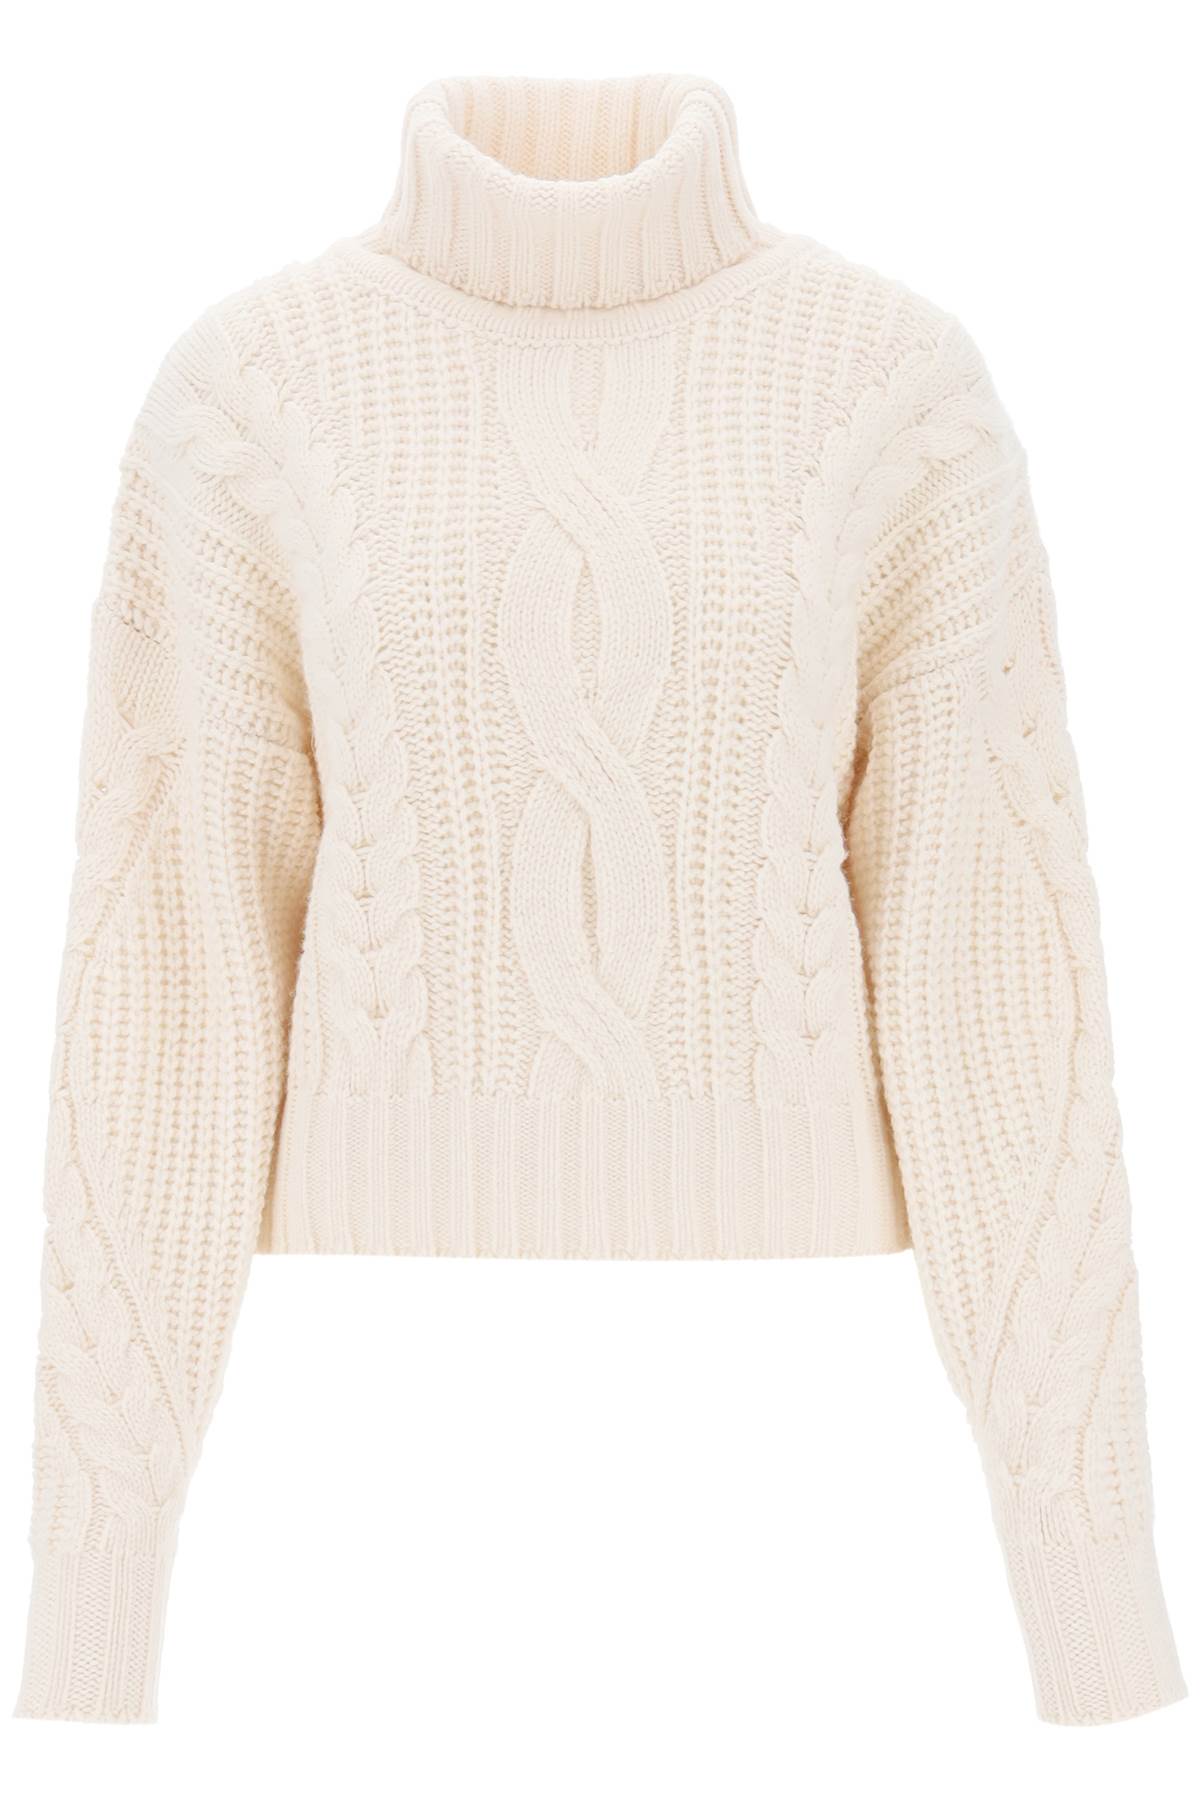 Mvp wardrobe visconti cable knit sweater-0